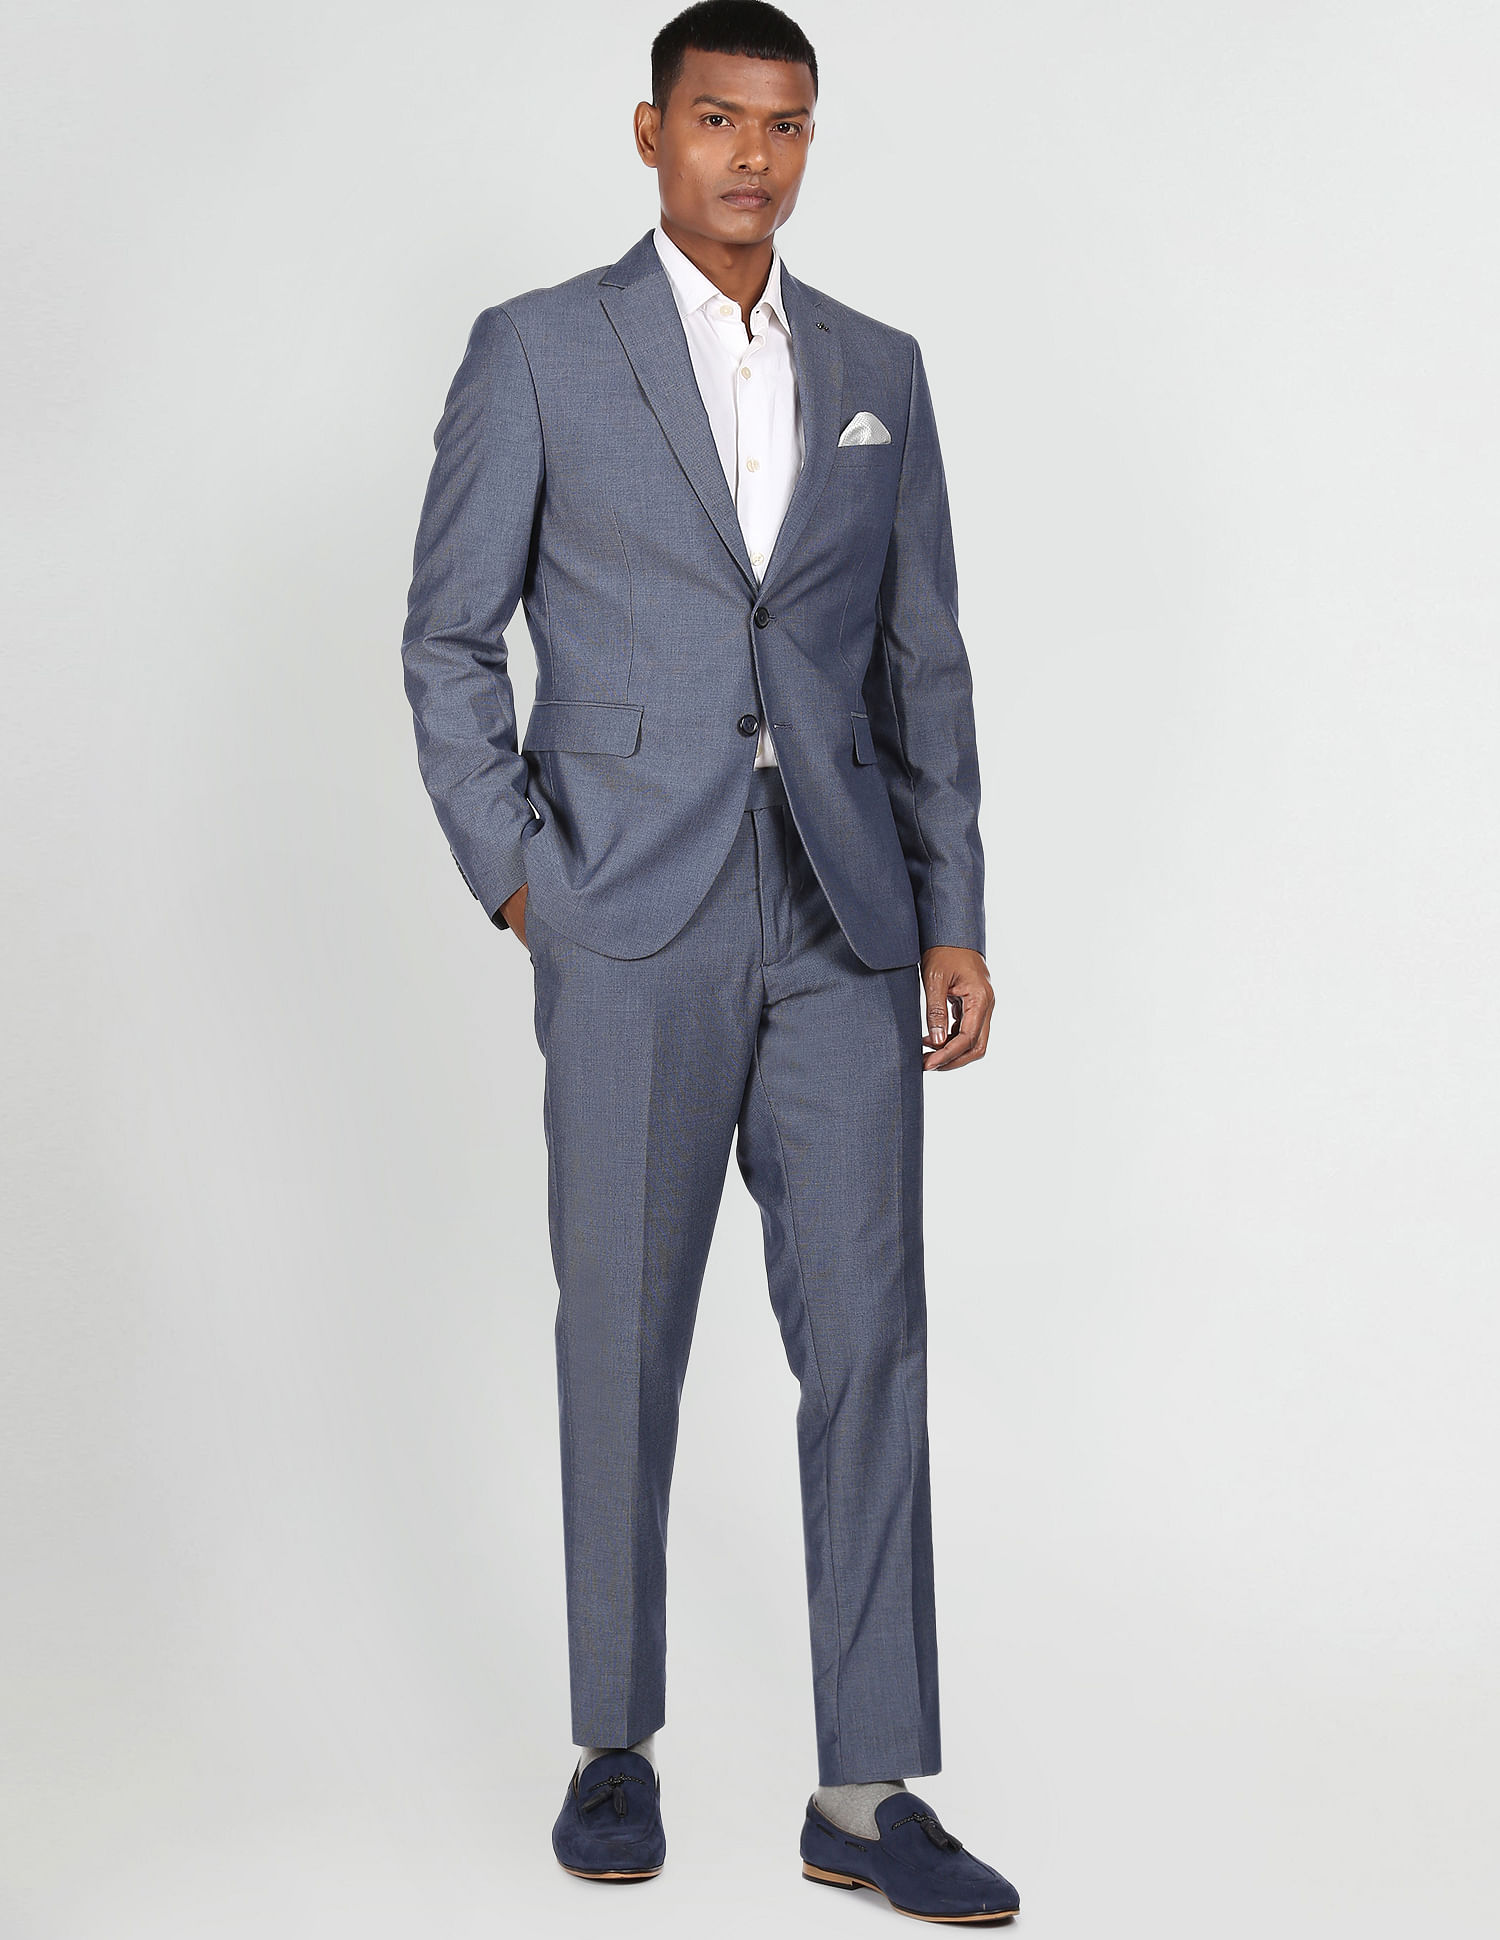 Mens Suits, Slim, Tailored & Regular Suits For Men